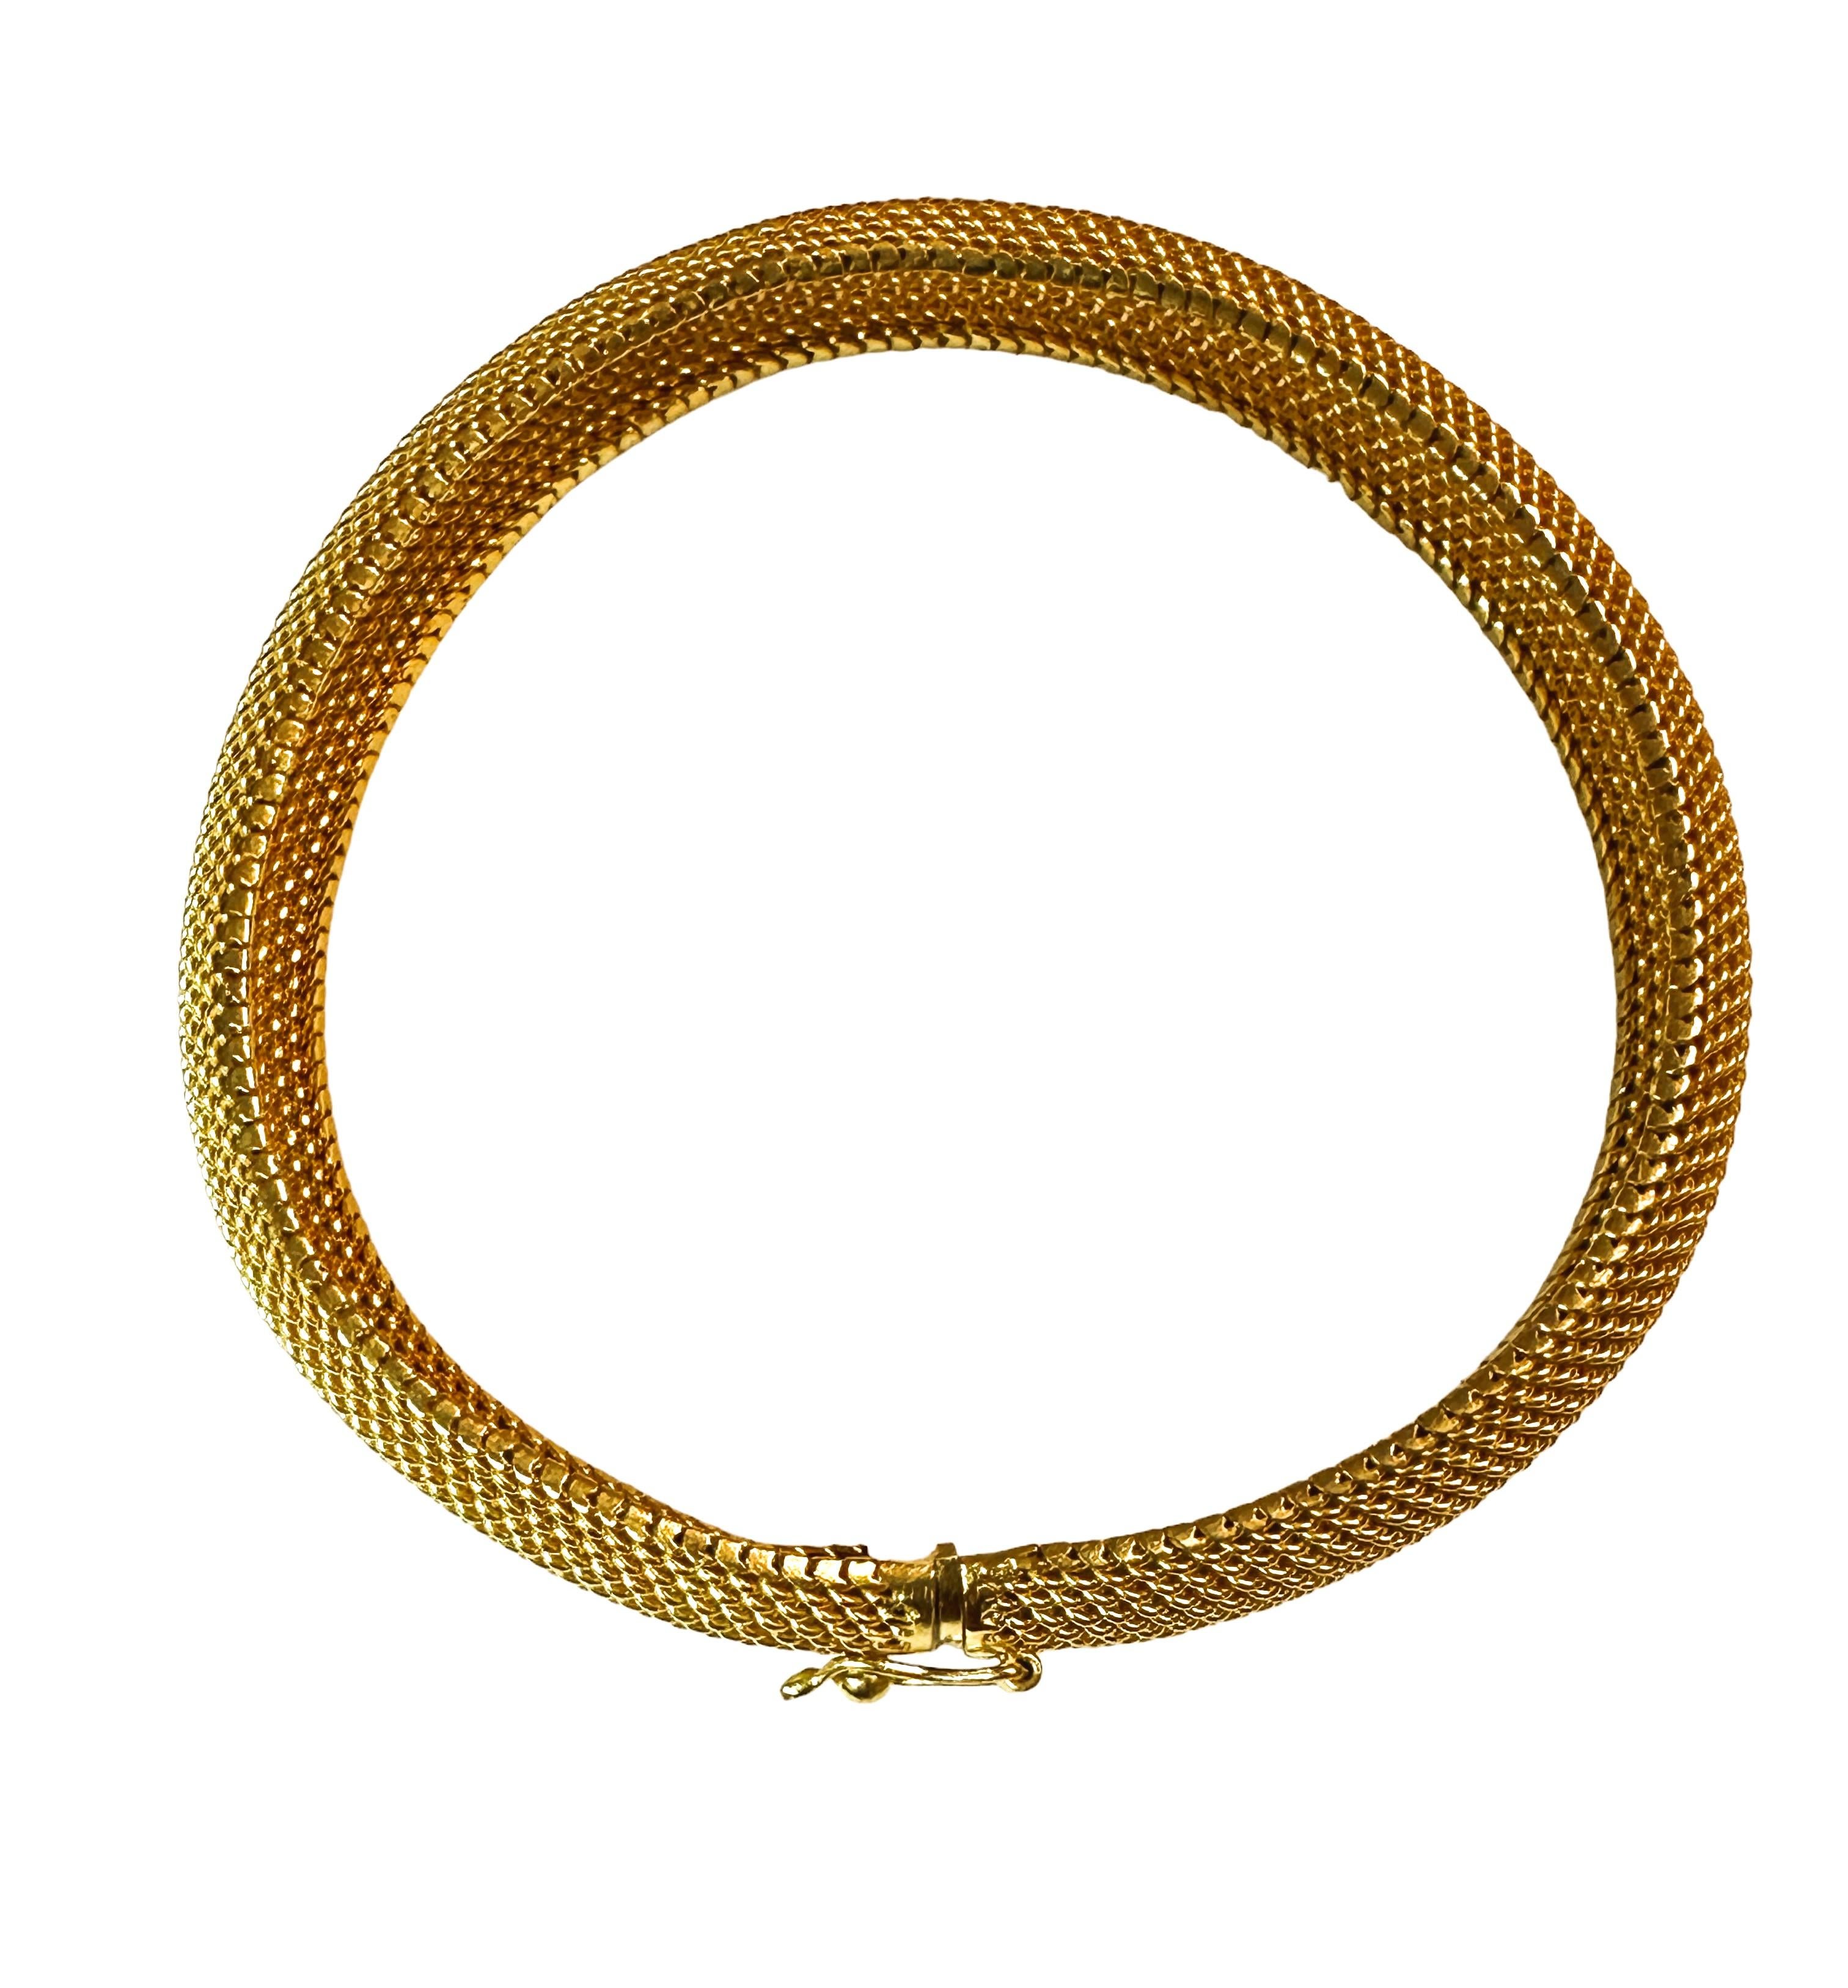 Stunning 22K Yellow Gold Woven Caviar Bracelet 30.59 Grams For Sale 1